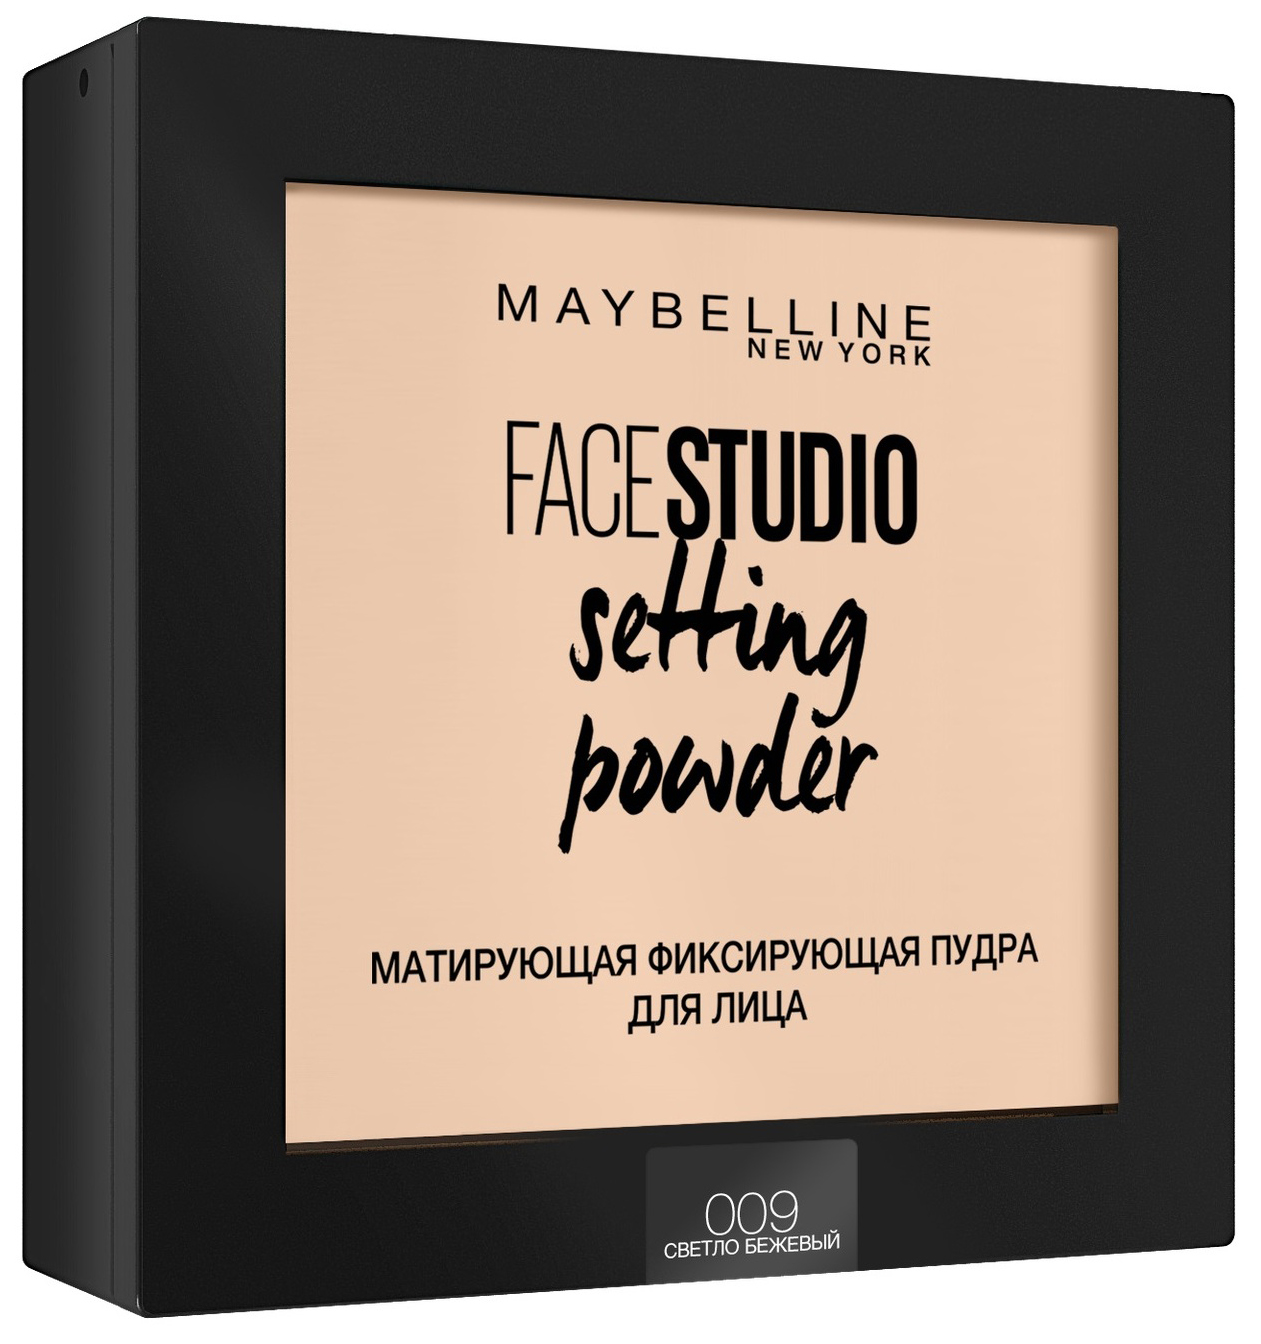 Пудра Maybelline Face Studio Setting Powder 009 Светло-бежевый 9 г